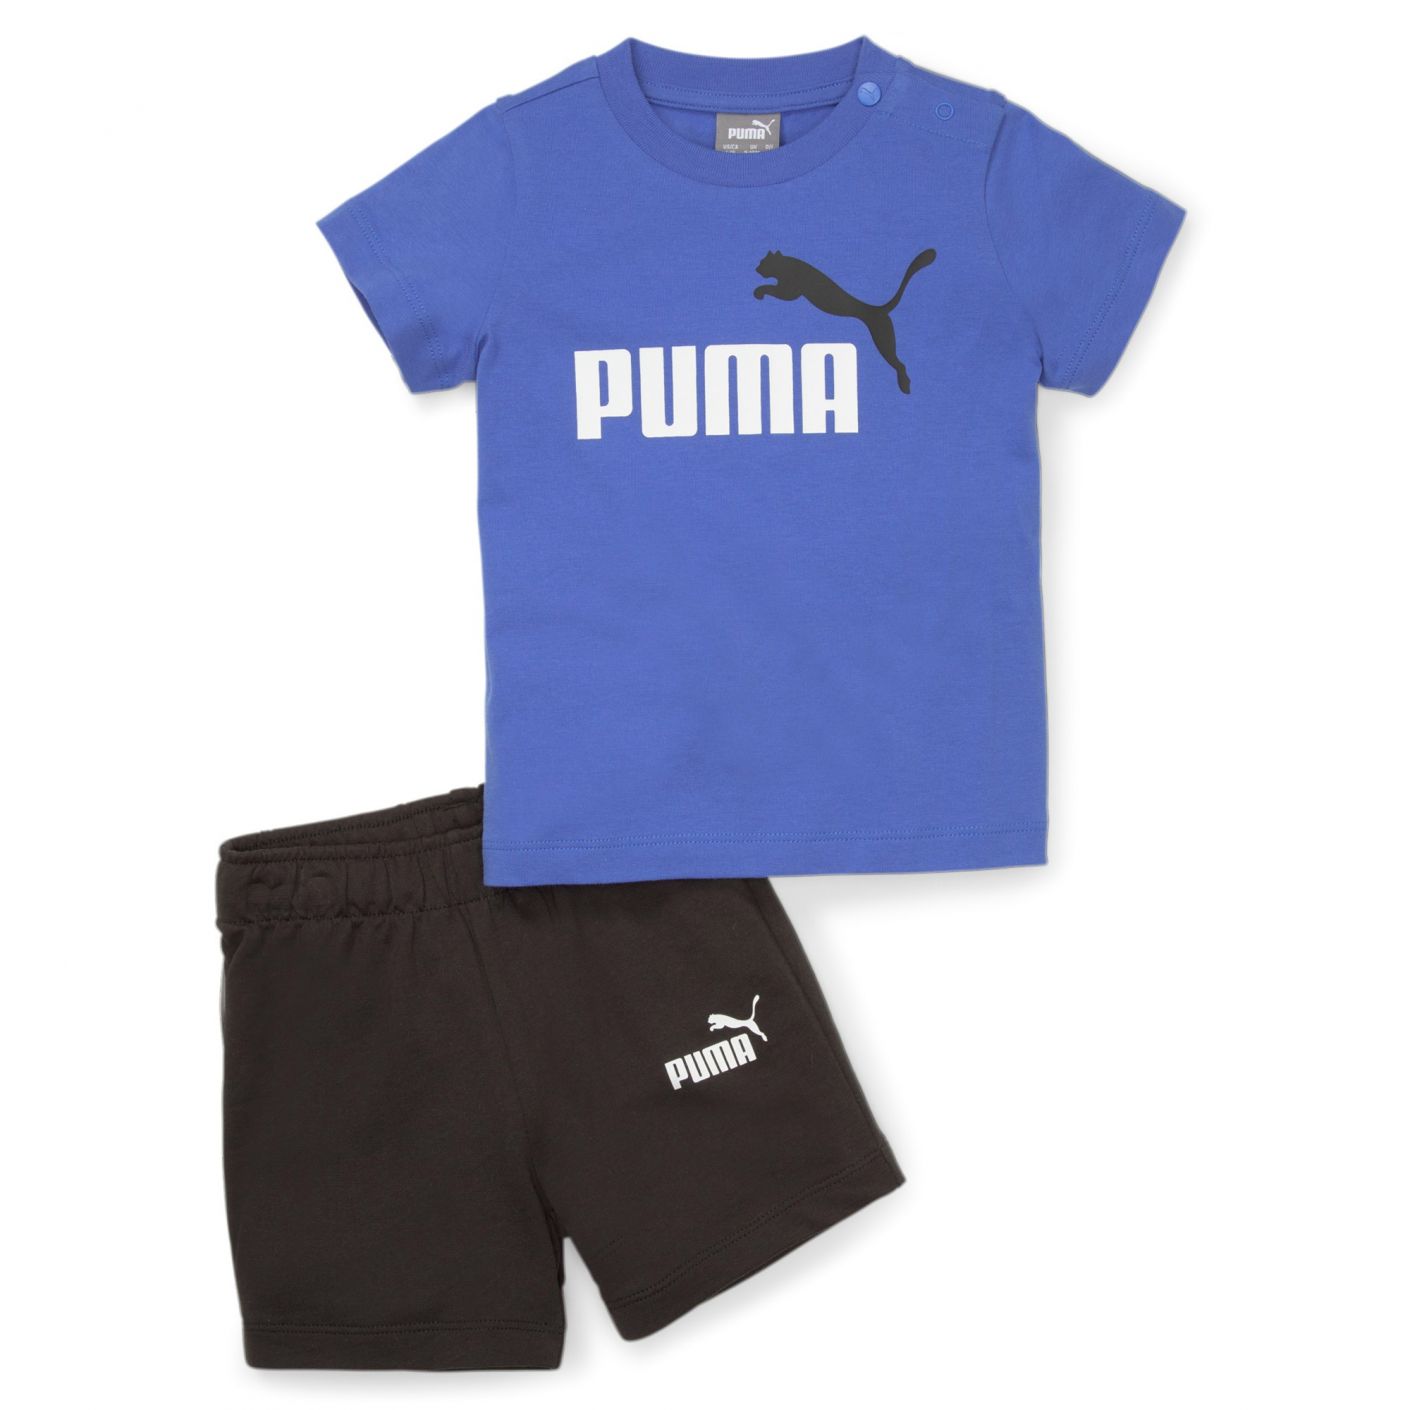 Puma Minicats Tee & Shorts Set